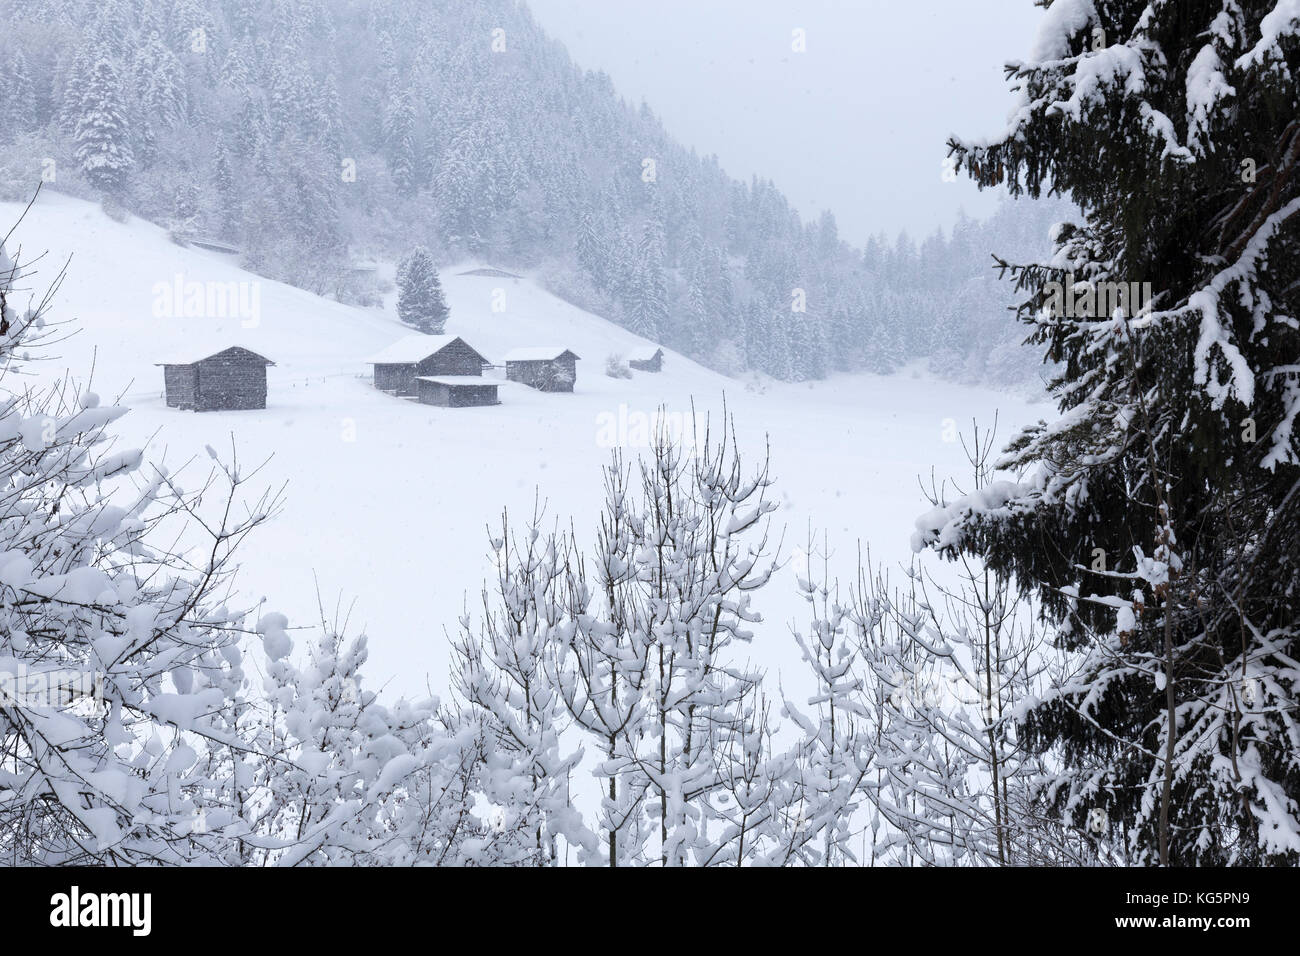 Capanne durante una nevicata pesante. Versam, Safiental, Surselva, Graubunden, Svizzera, Europa Foto Stock